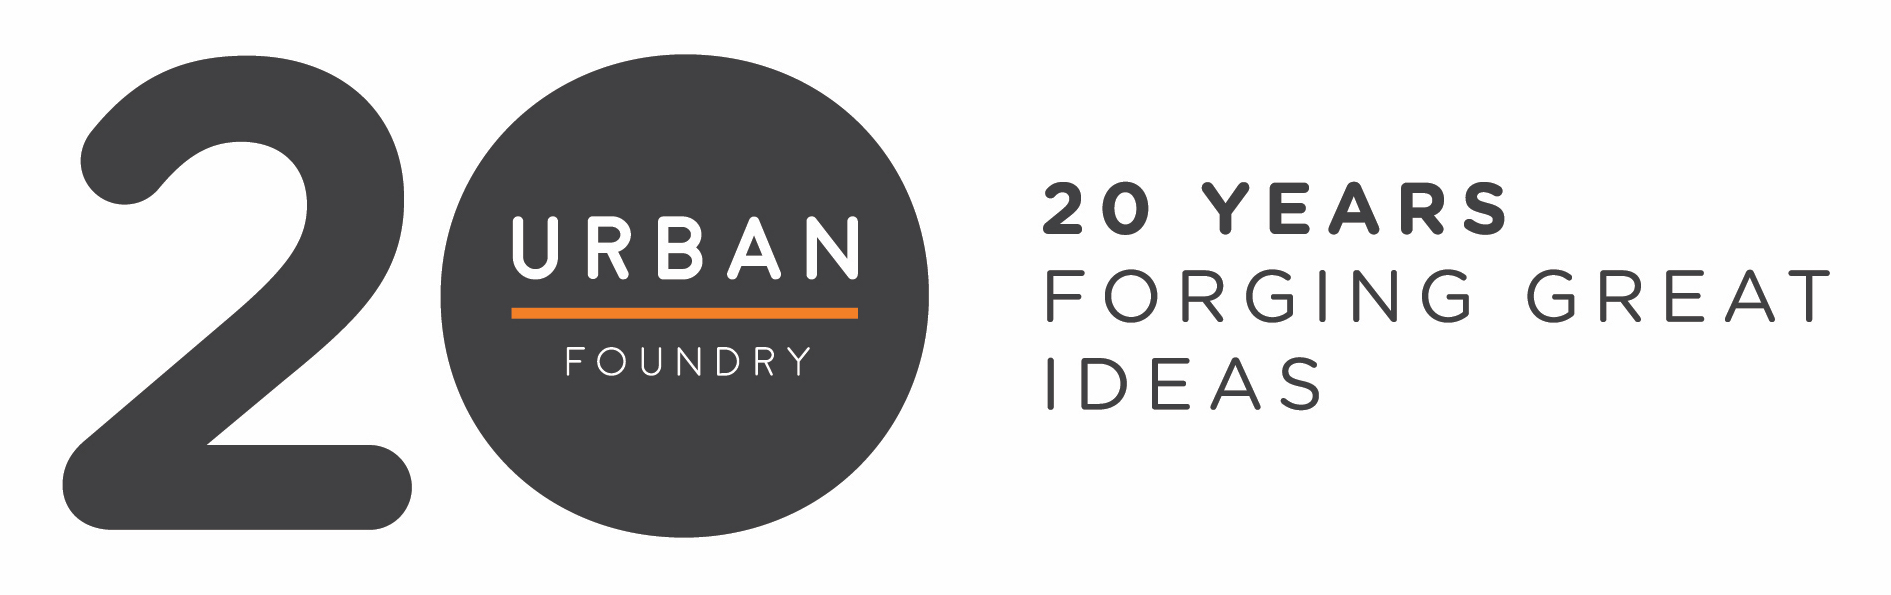 20 year anniversary logo landscape